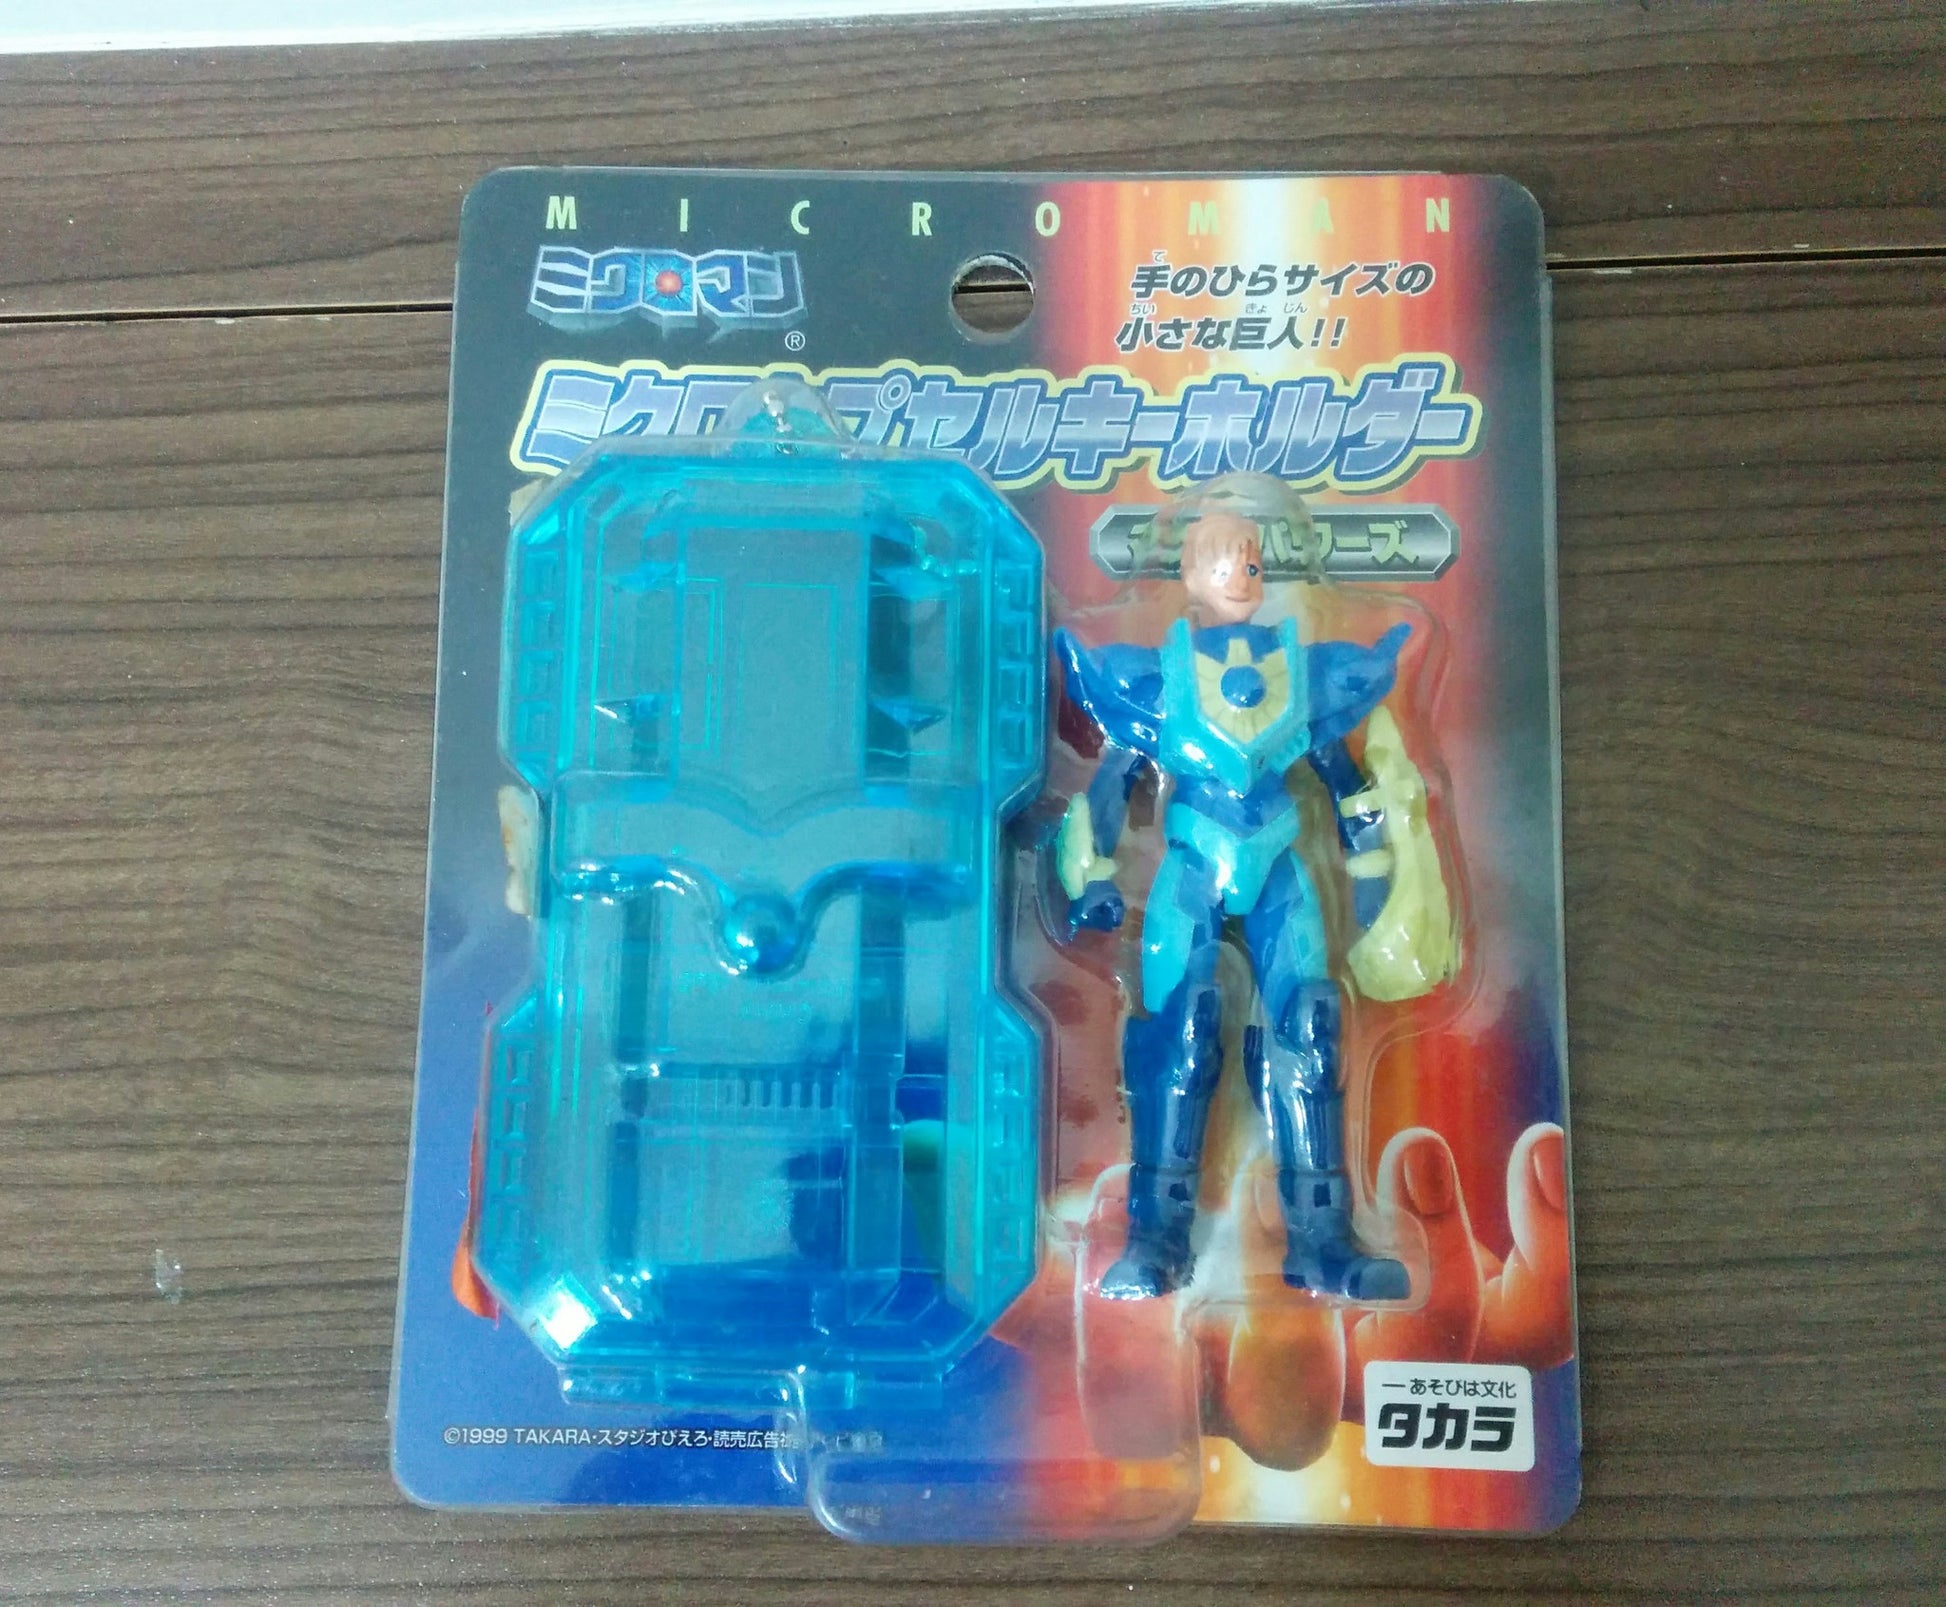 Takara 1999 Microman UFO Prize Anime style Magne Power Capsule Keychain Walt Ver Pvc Action Figure - Lavits Figure
